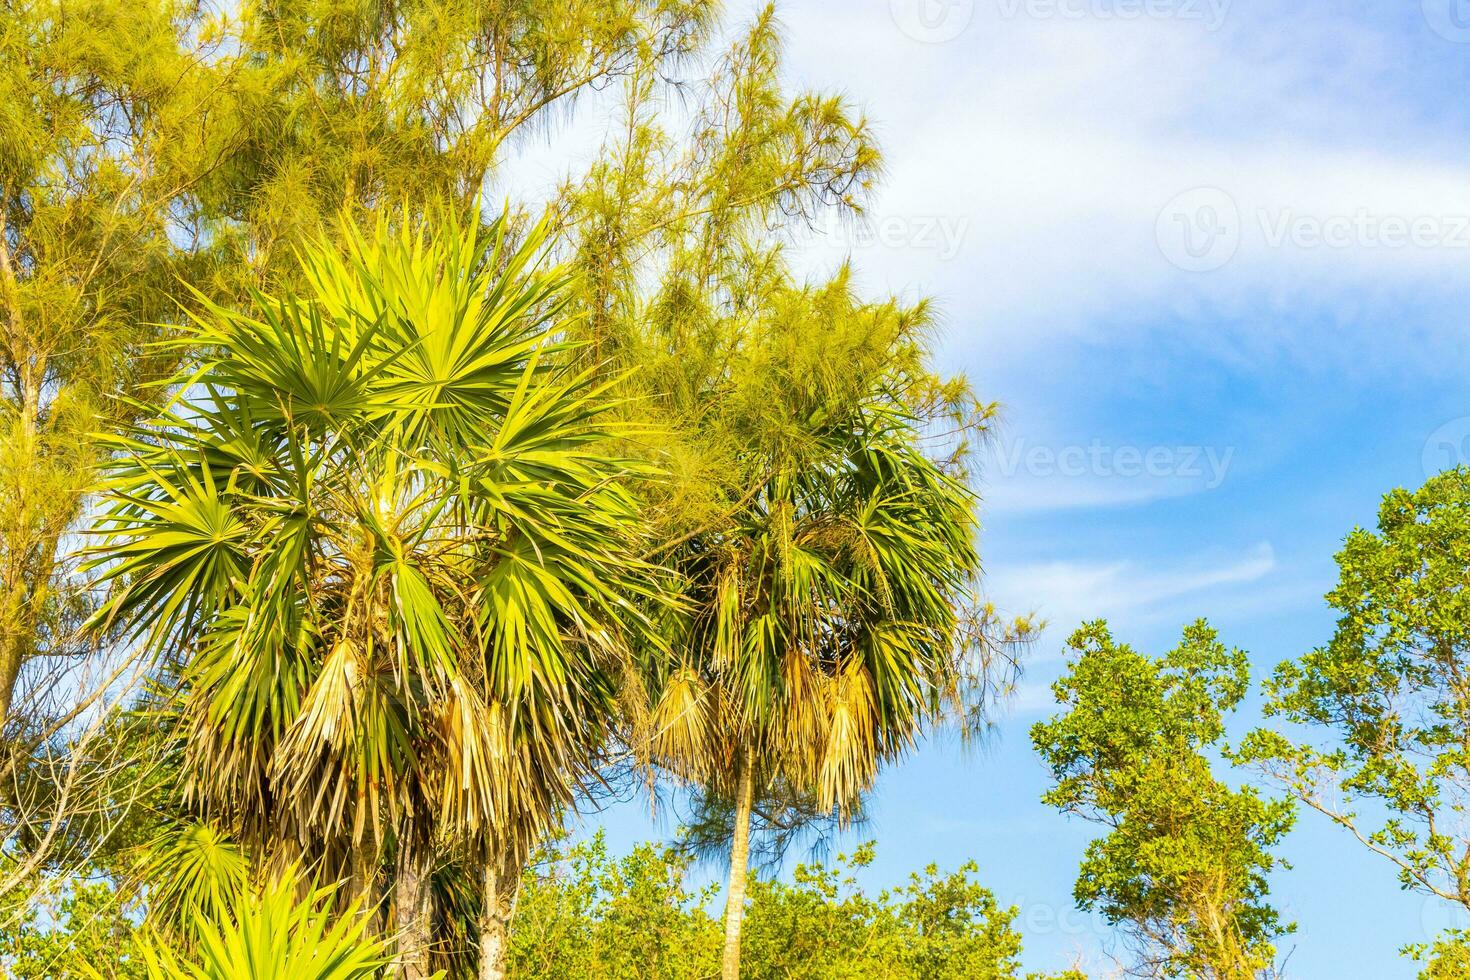 tropicale verde esotico caraibico maya chit palma palme foresta pluviale Messico. foto